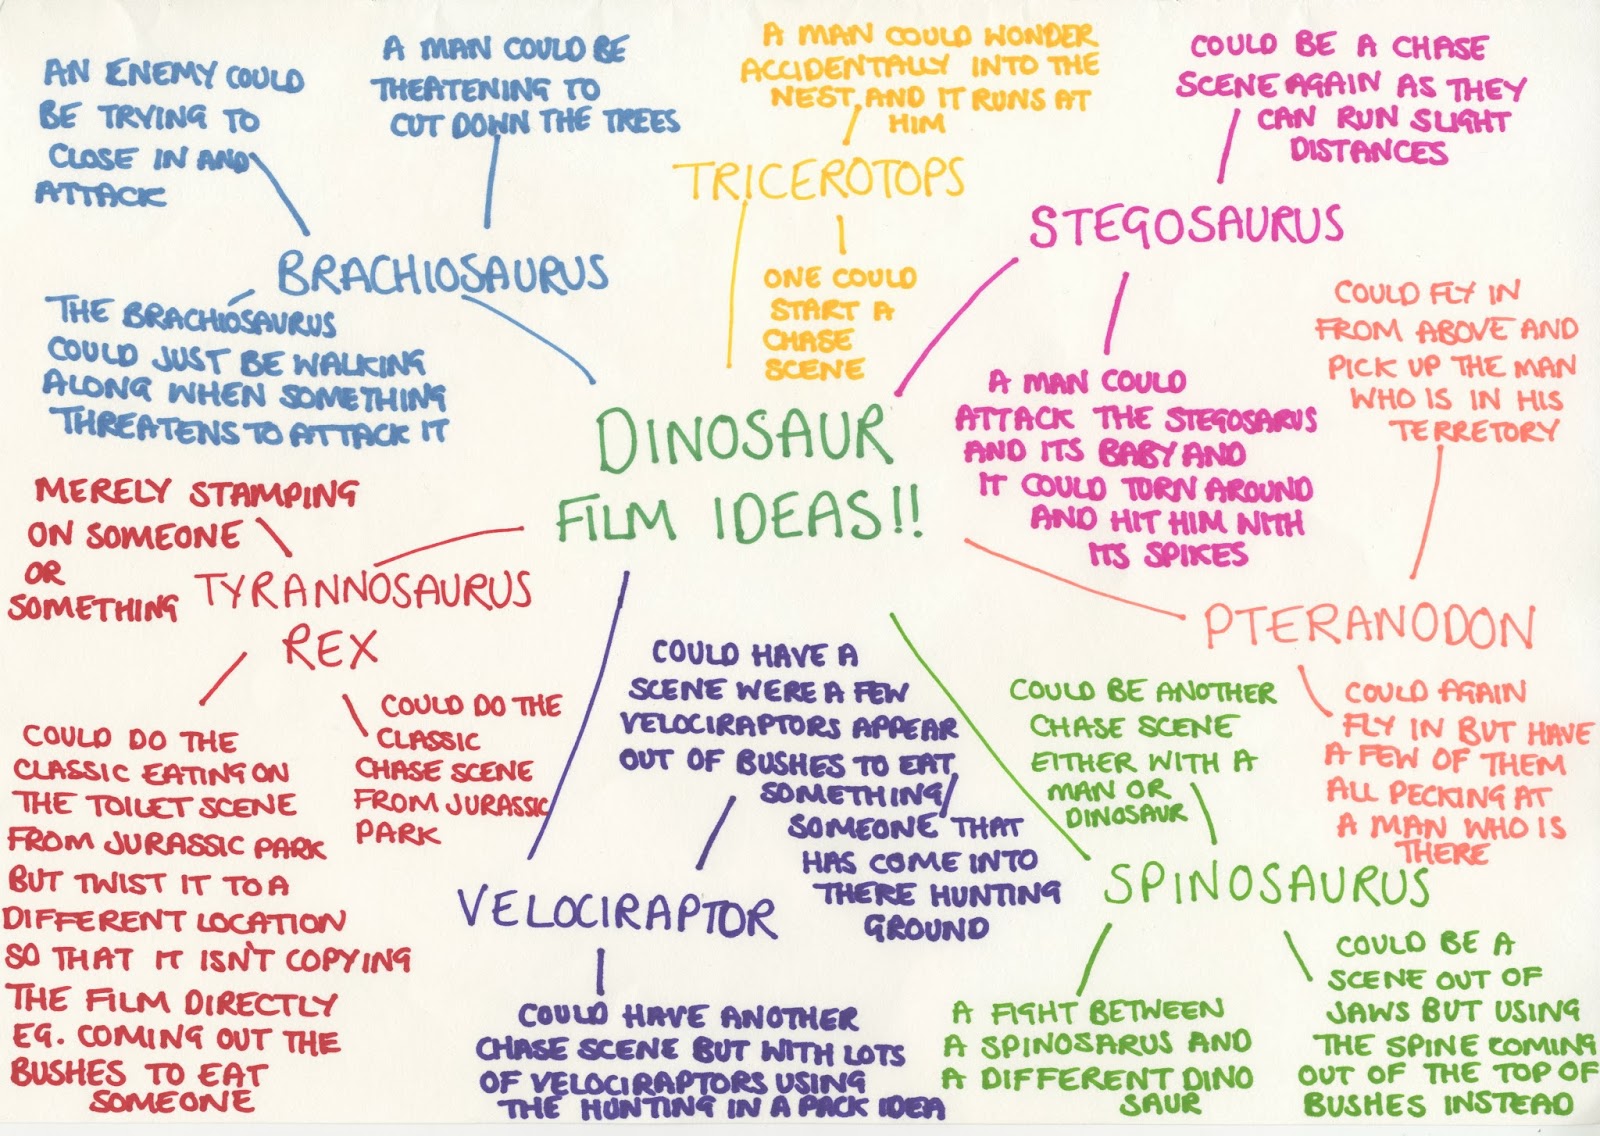 Dino Film Ideas Dino+Film+Ideas